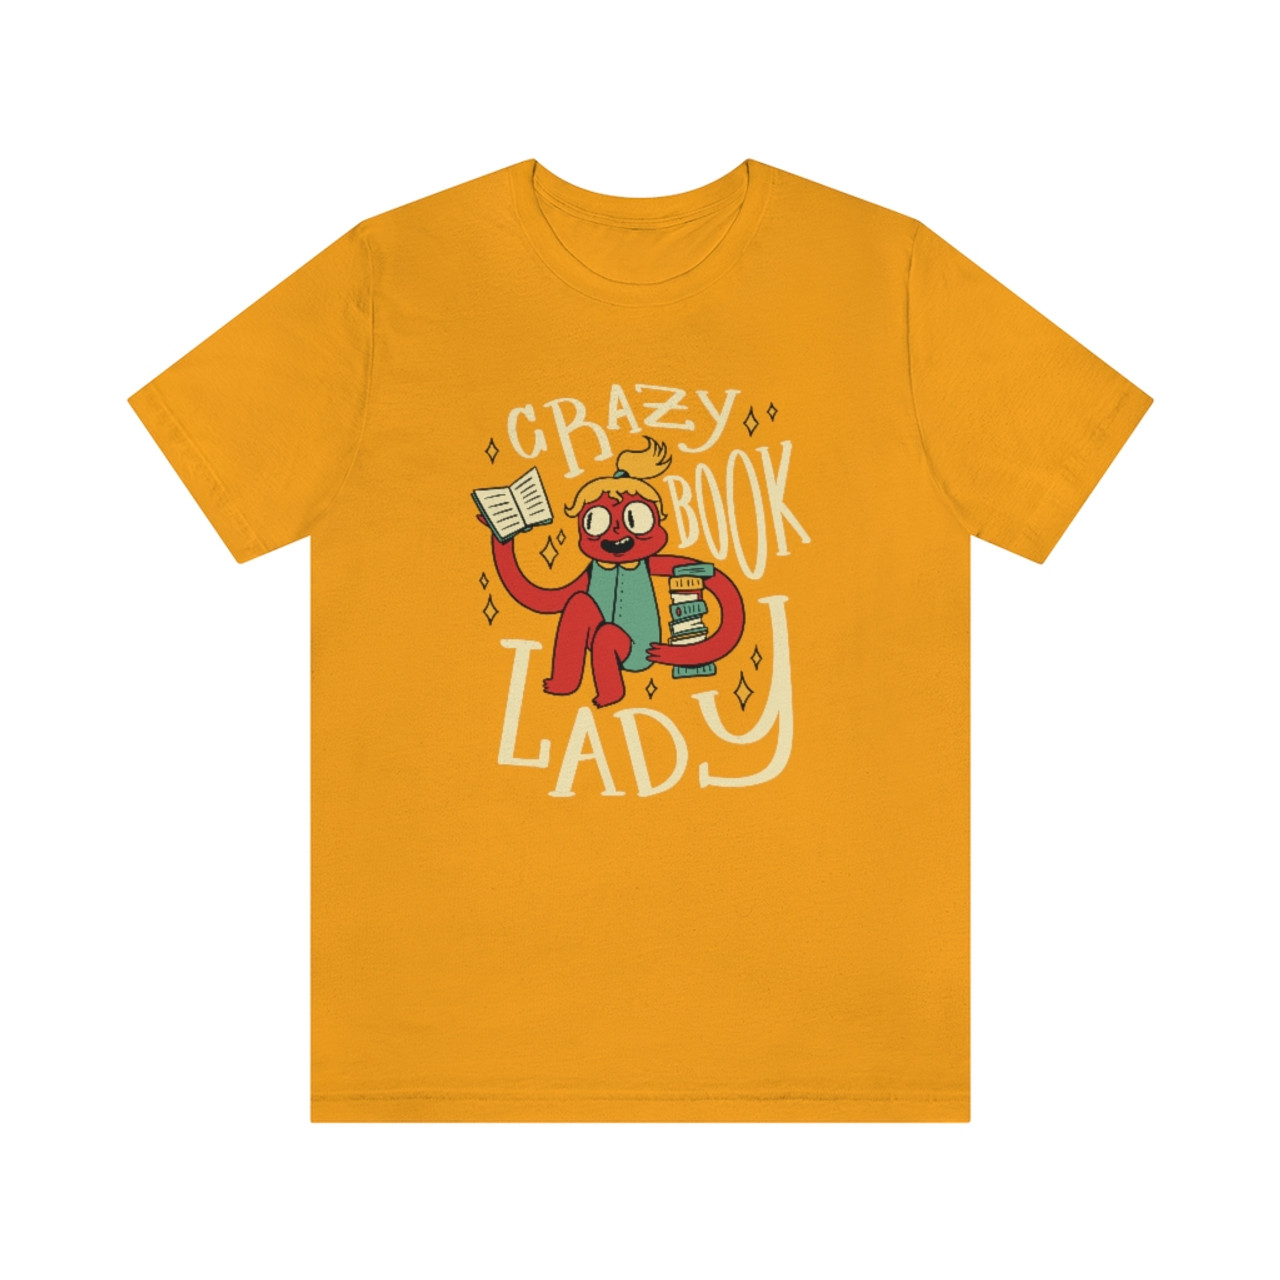 "Crazy Book Lady" Crew Neck T-shirt